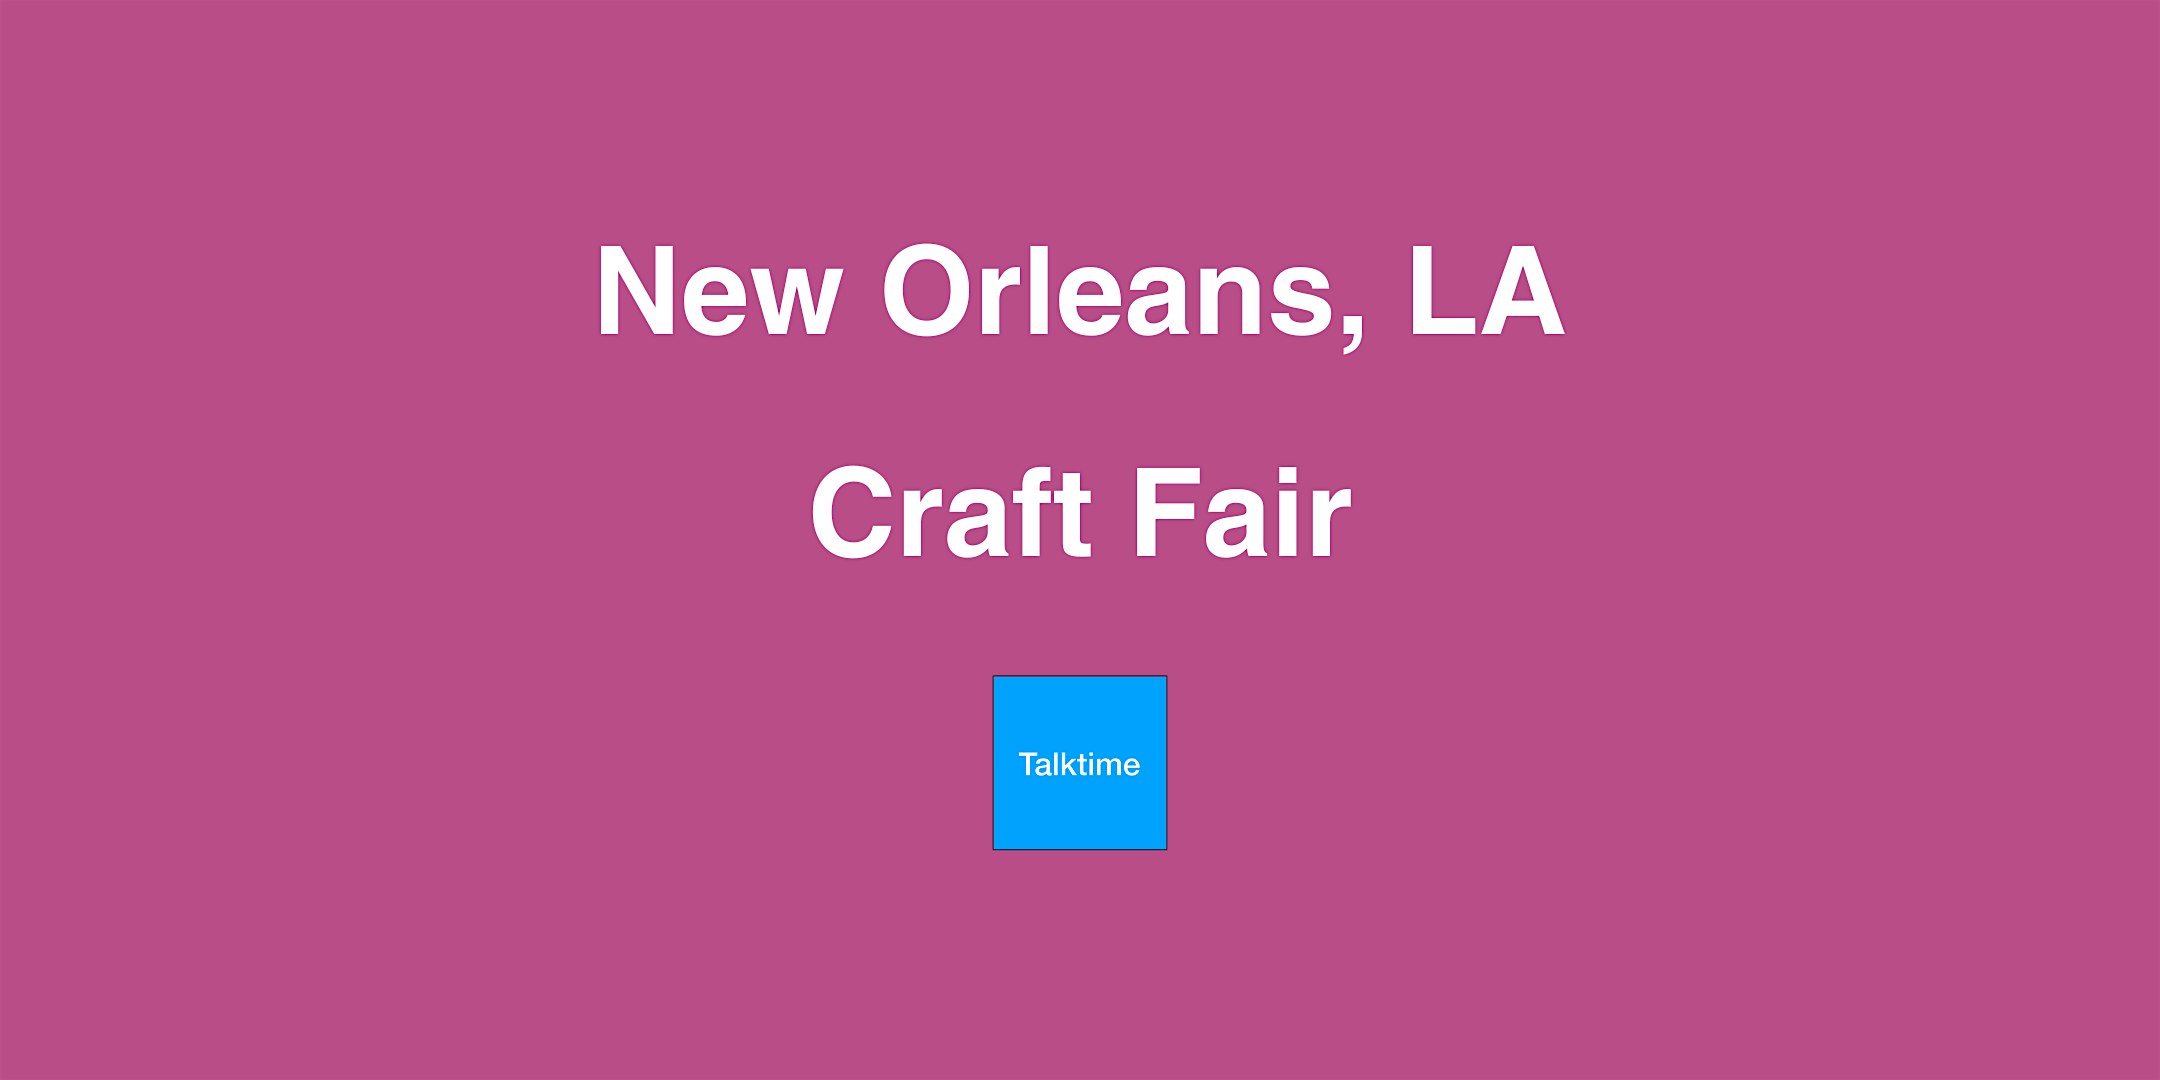 Craft Fair - New Orleans